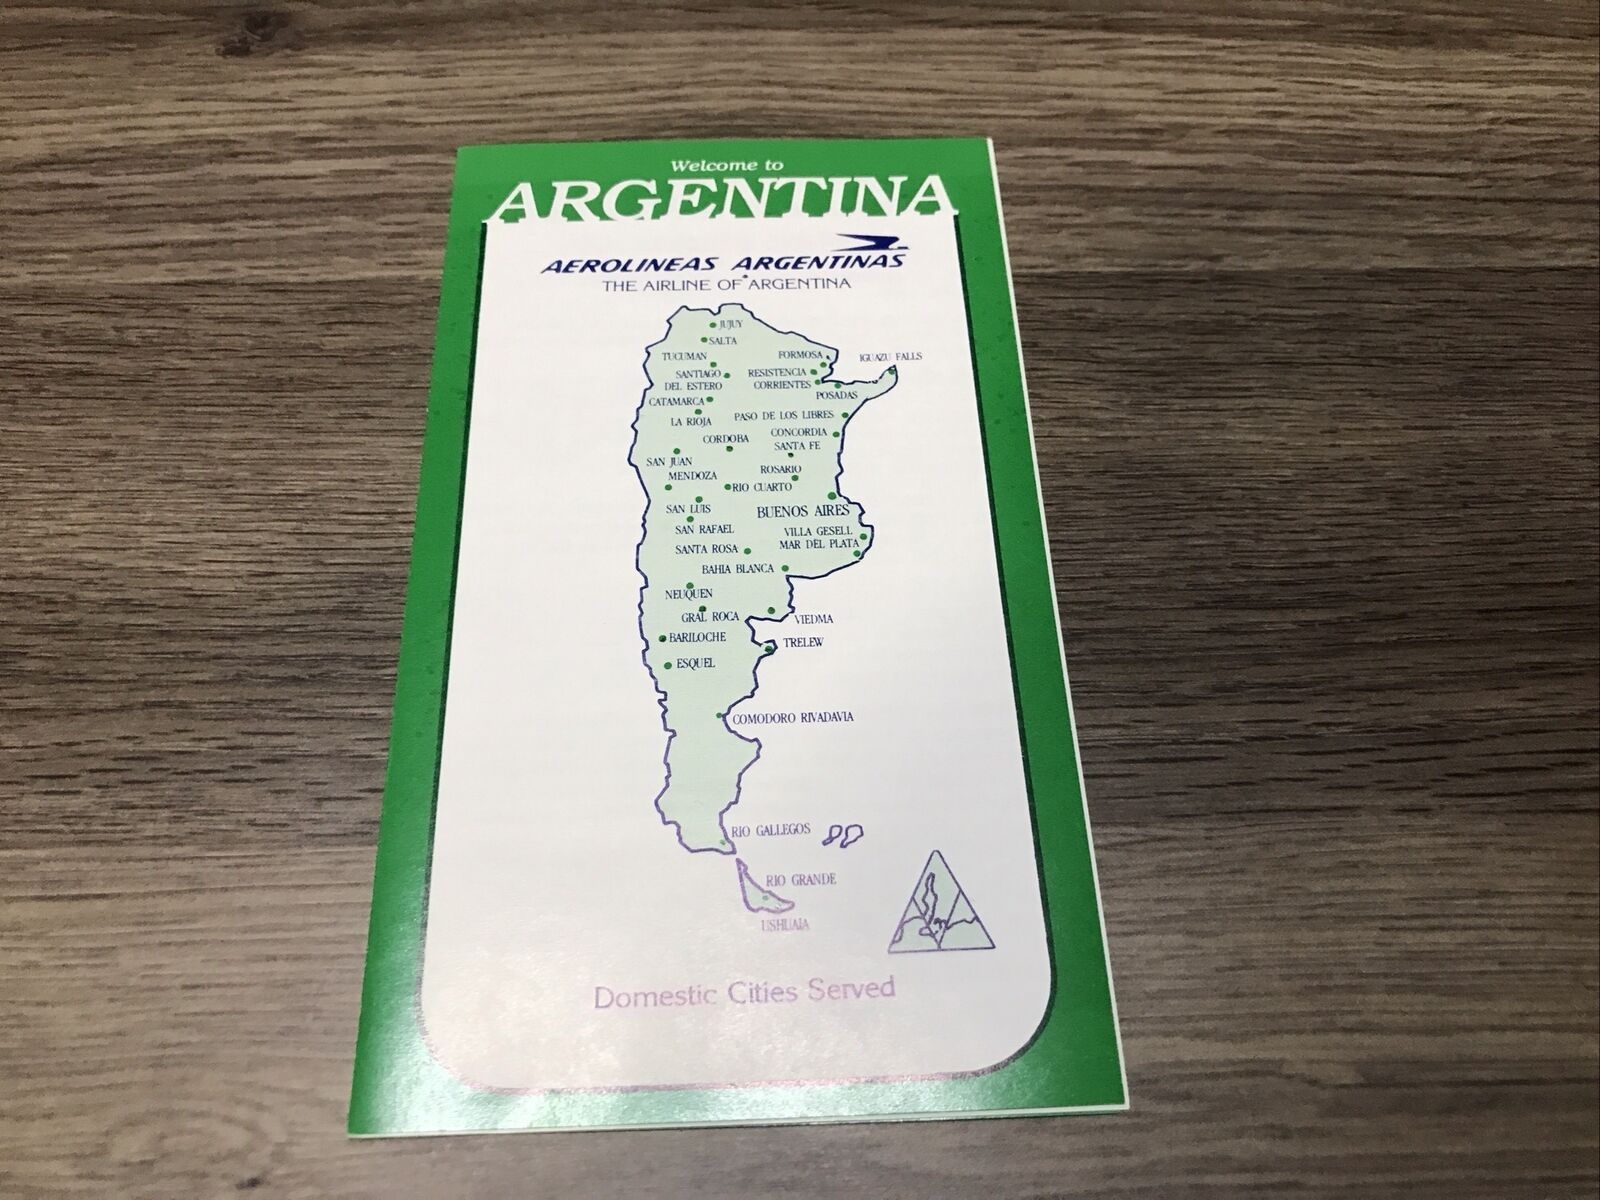 Aerolineas Argentinas Airlines Map